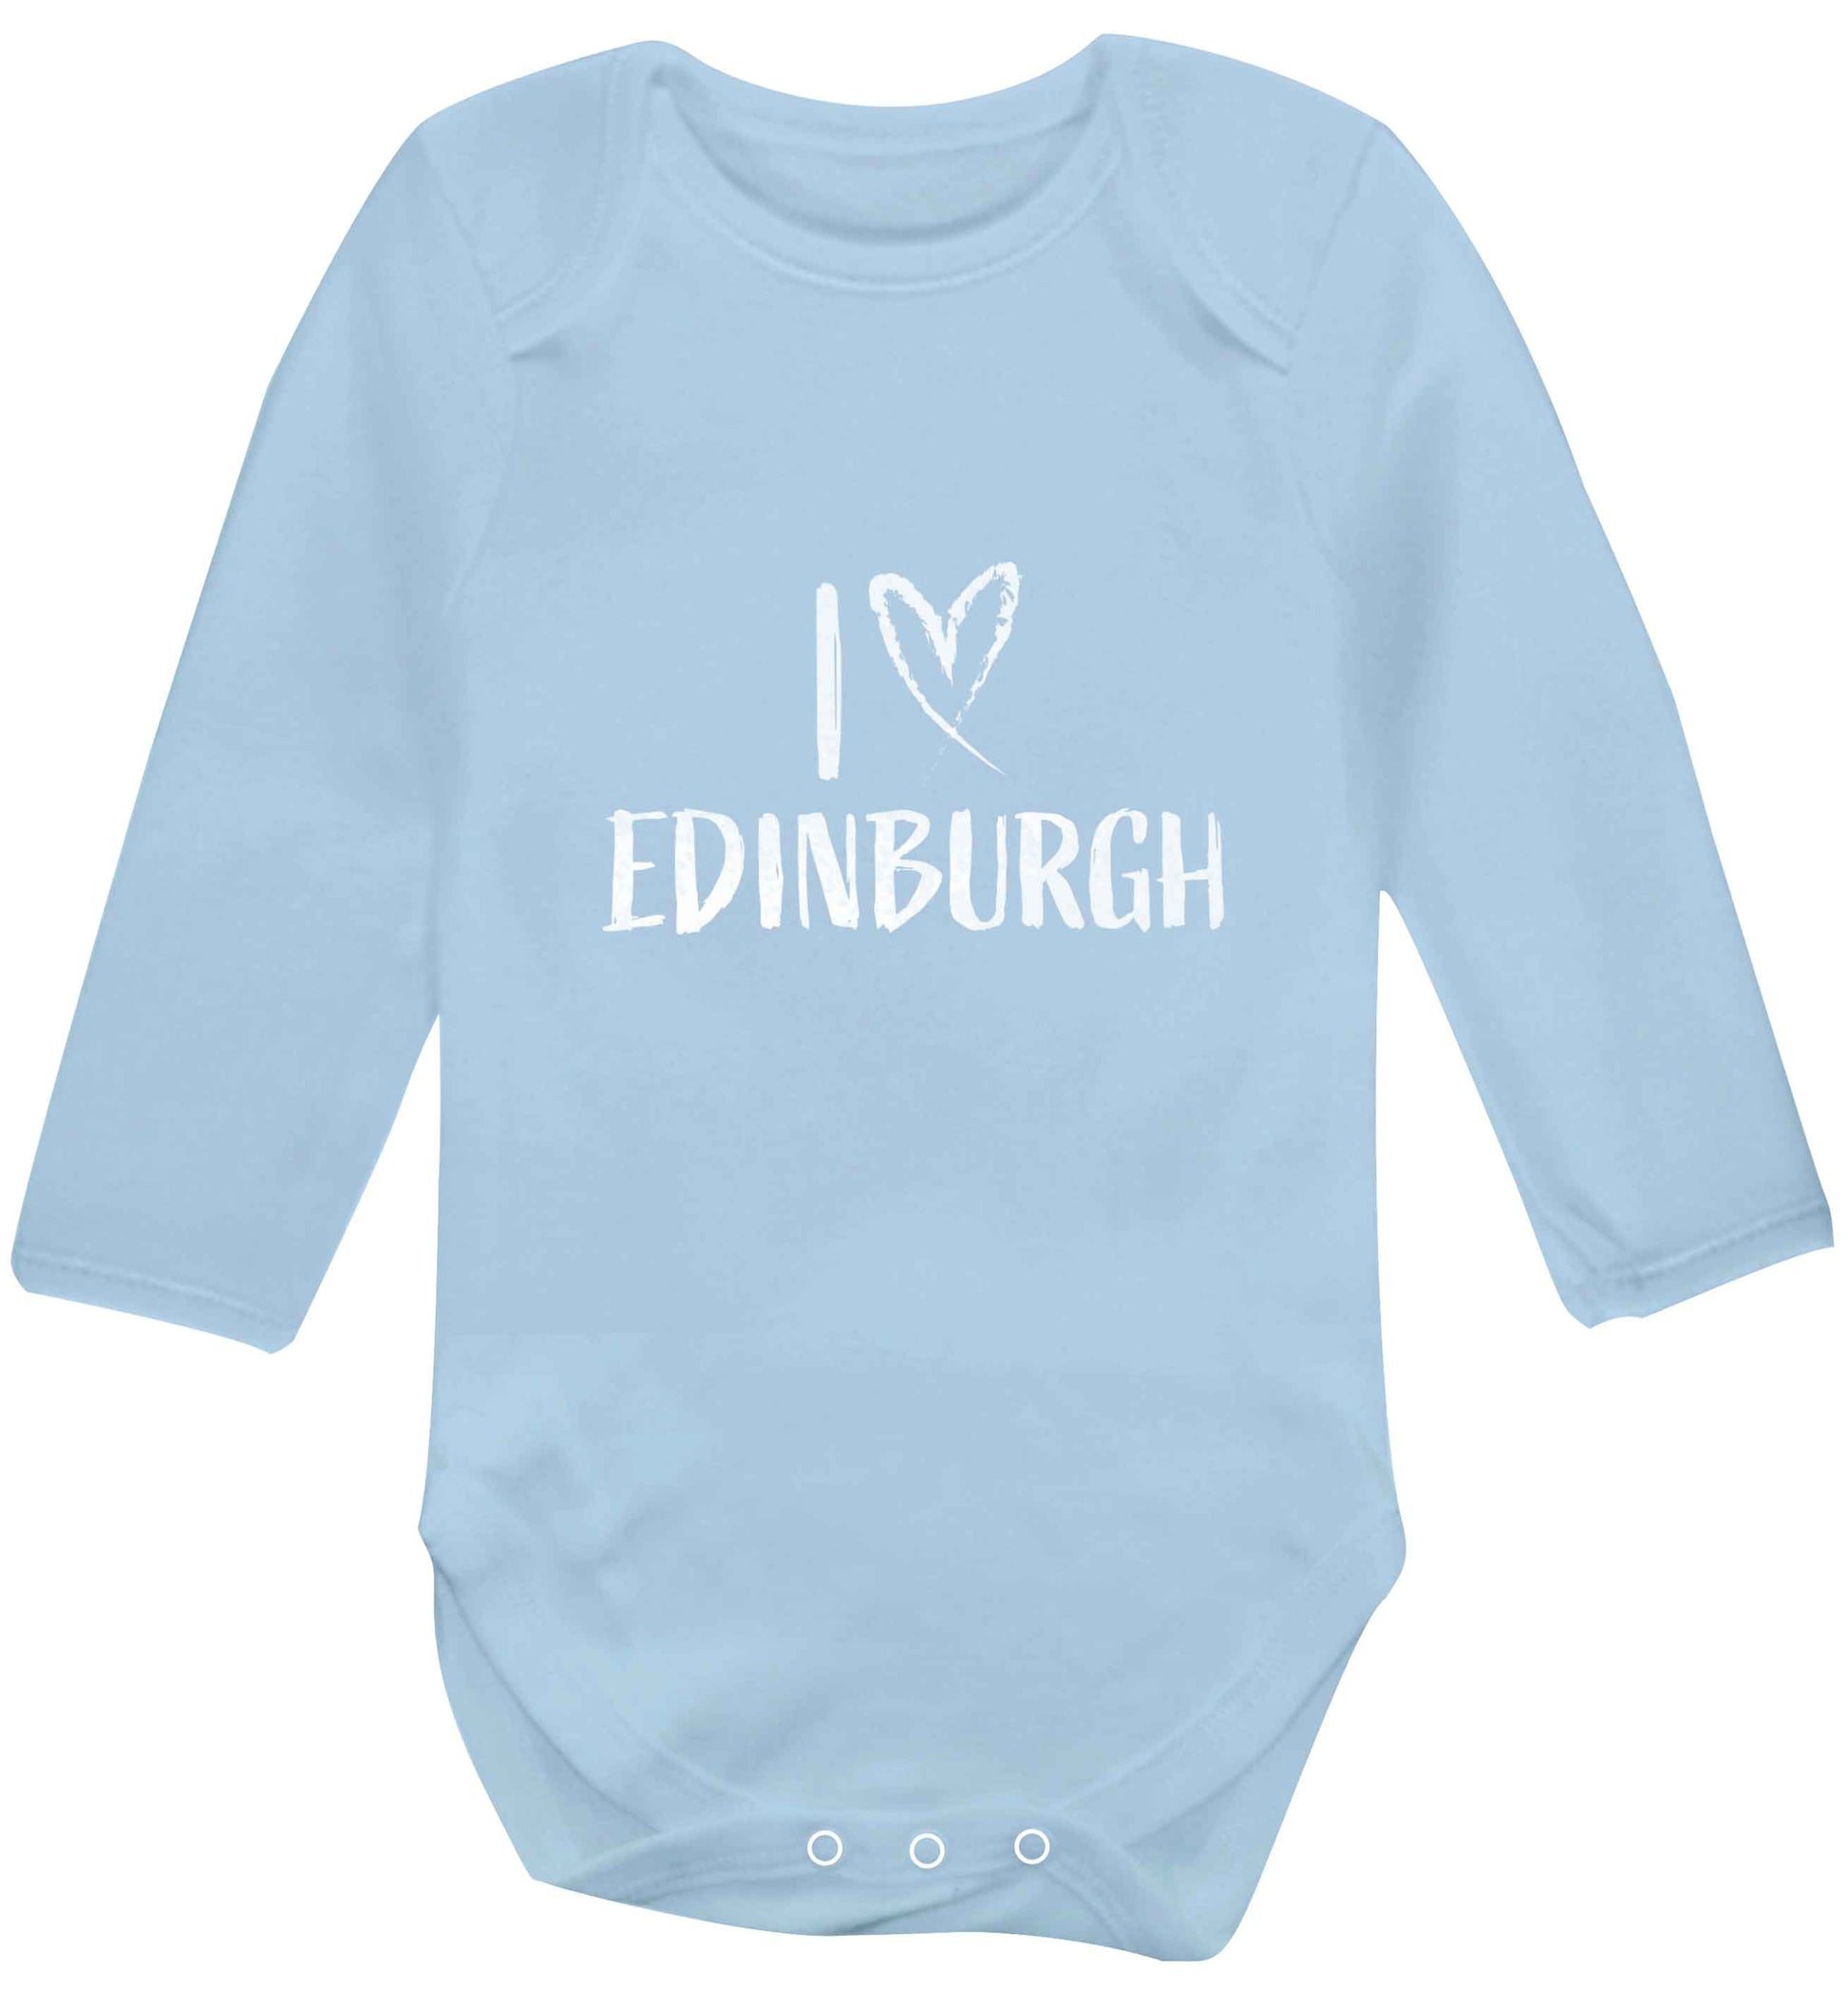 I love Edinburgh baby vest long sleeved pale blue 6-12 months